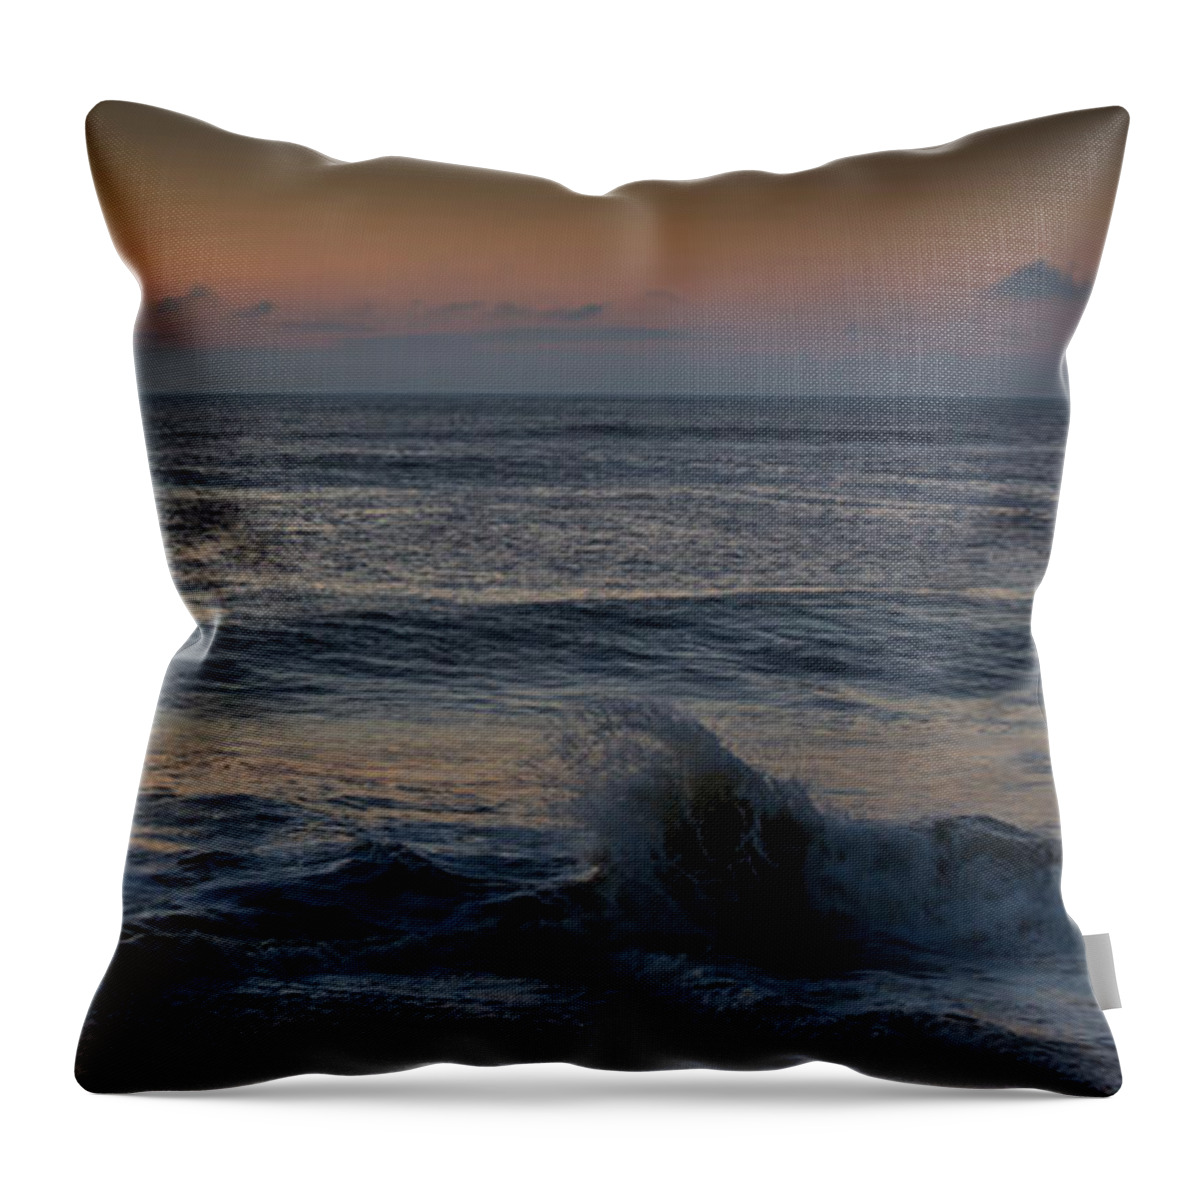 Assateague Throw Pillow featuring the photograph Assateague Waves by Photographic Arts And Design Studio